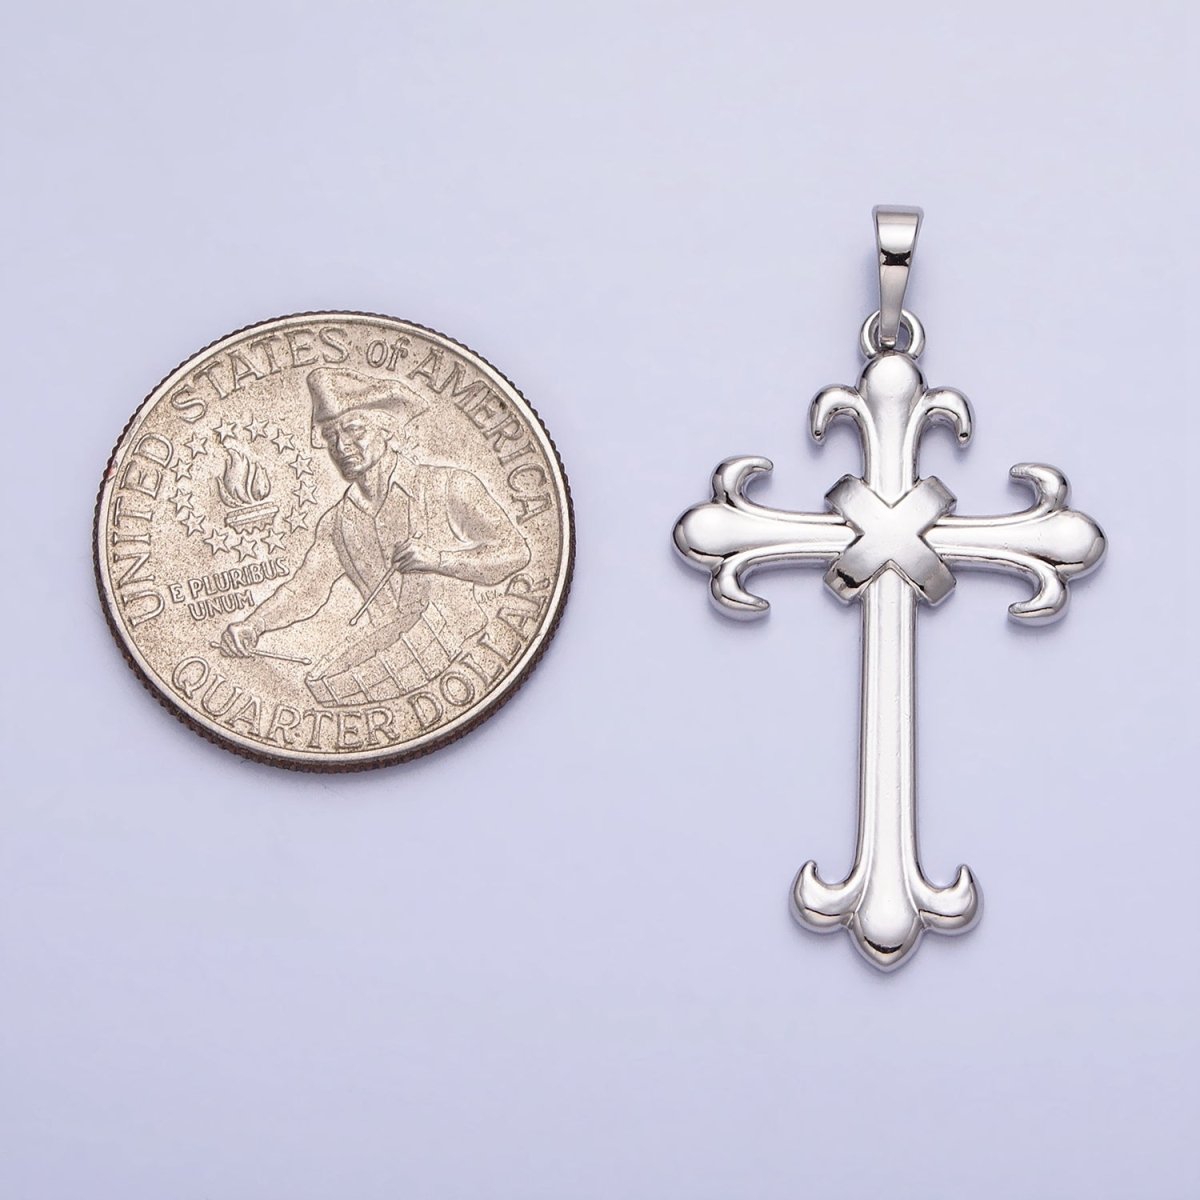 Antique Cross Pendant Victorian Inspired Cross Charm Religious Jewelry Making AA249 - DLUXCA